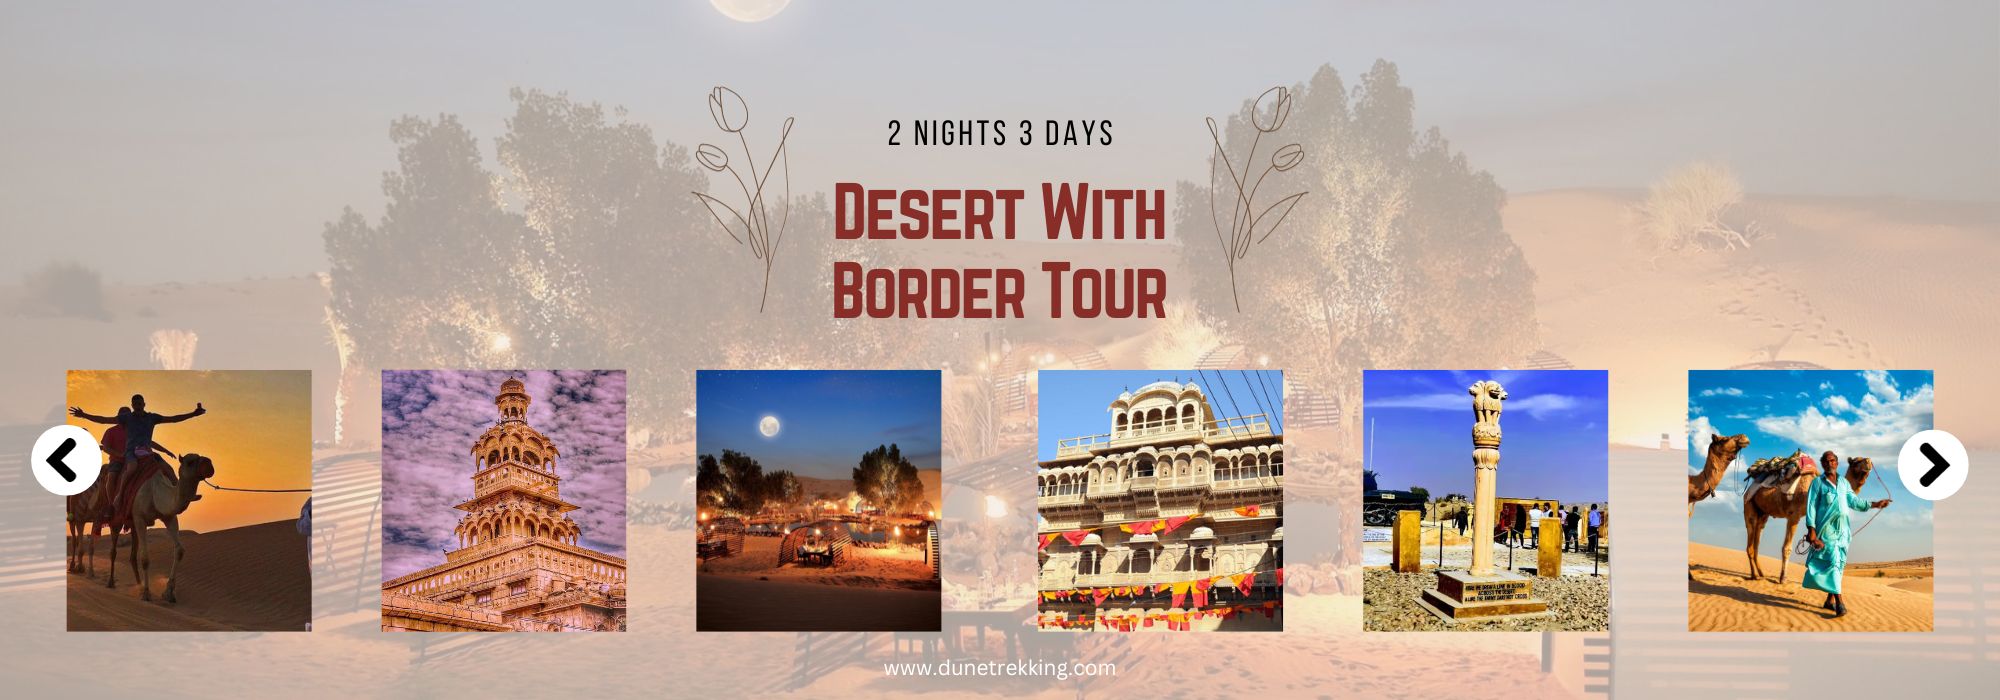 2 Nights 3 Days Desert With Border Tour- dunetrekking